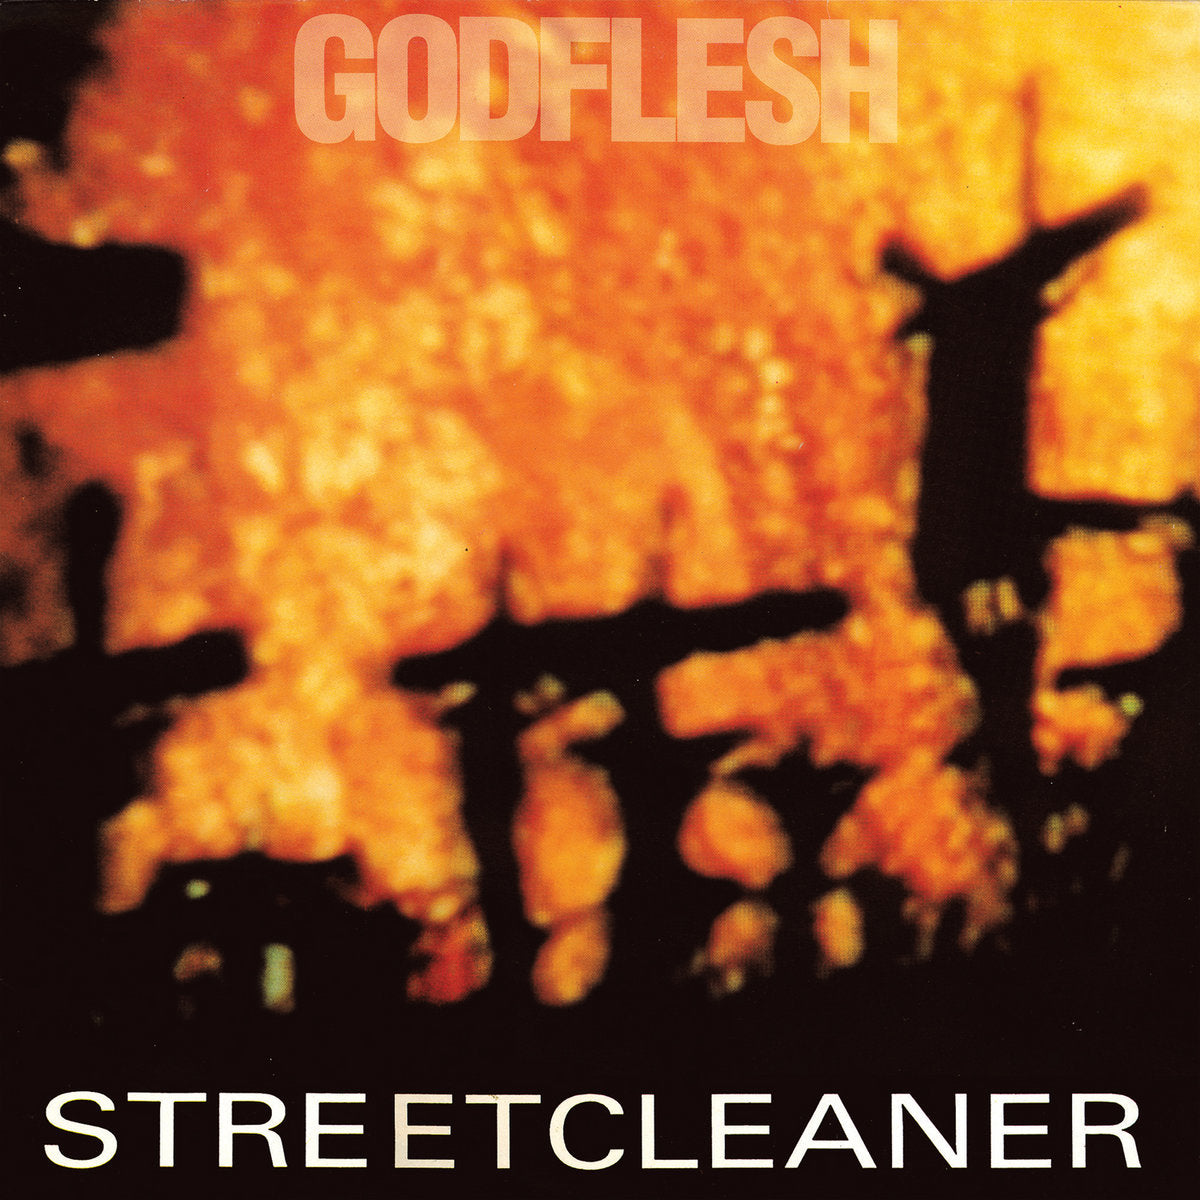 Godflesh "Streetcleaner" Digital Download